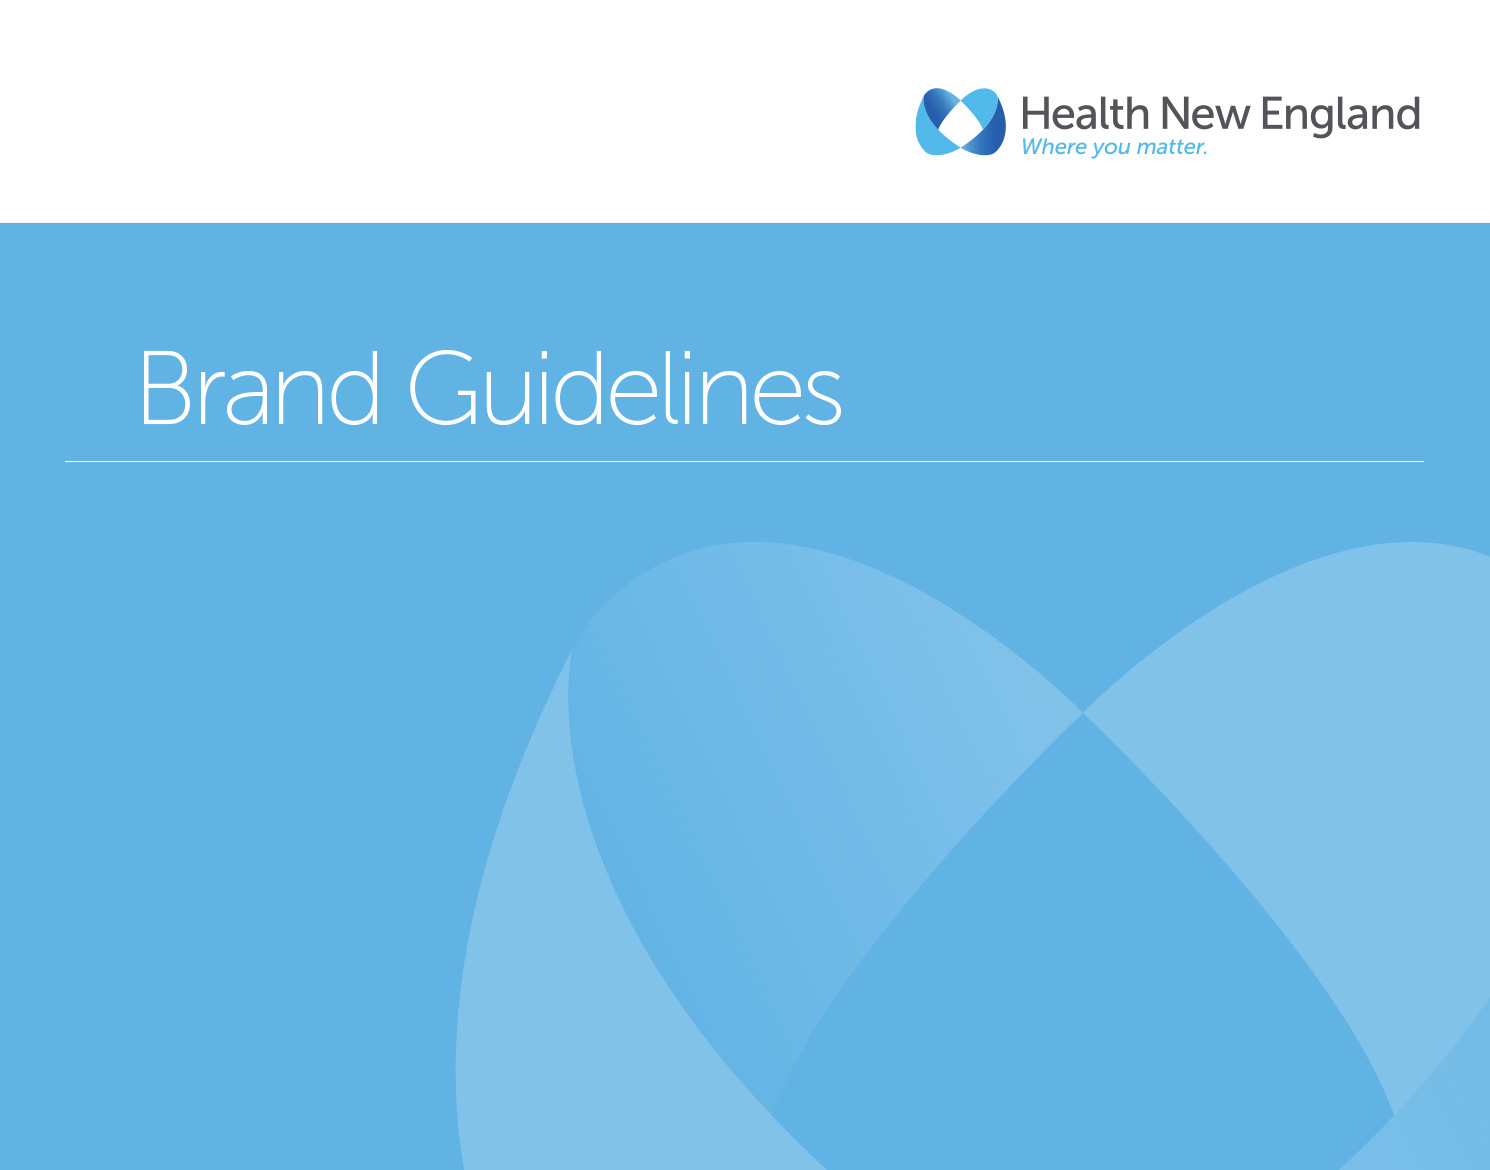 Health New England brand guide cover